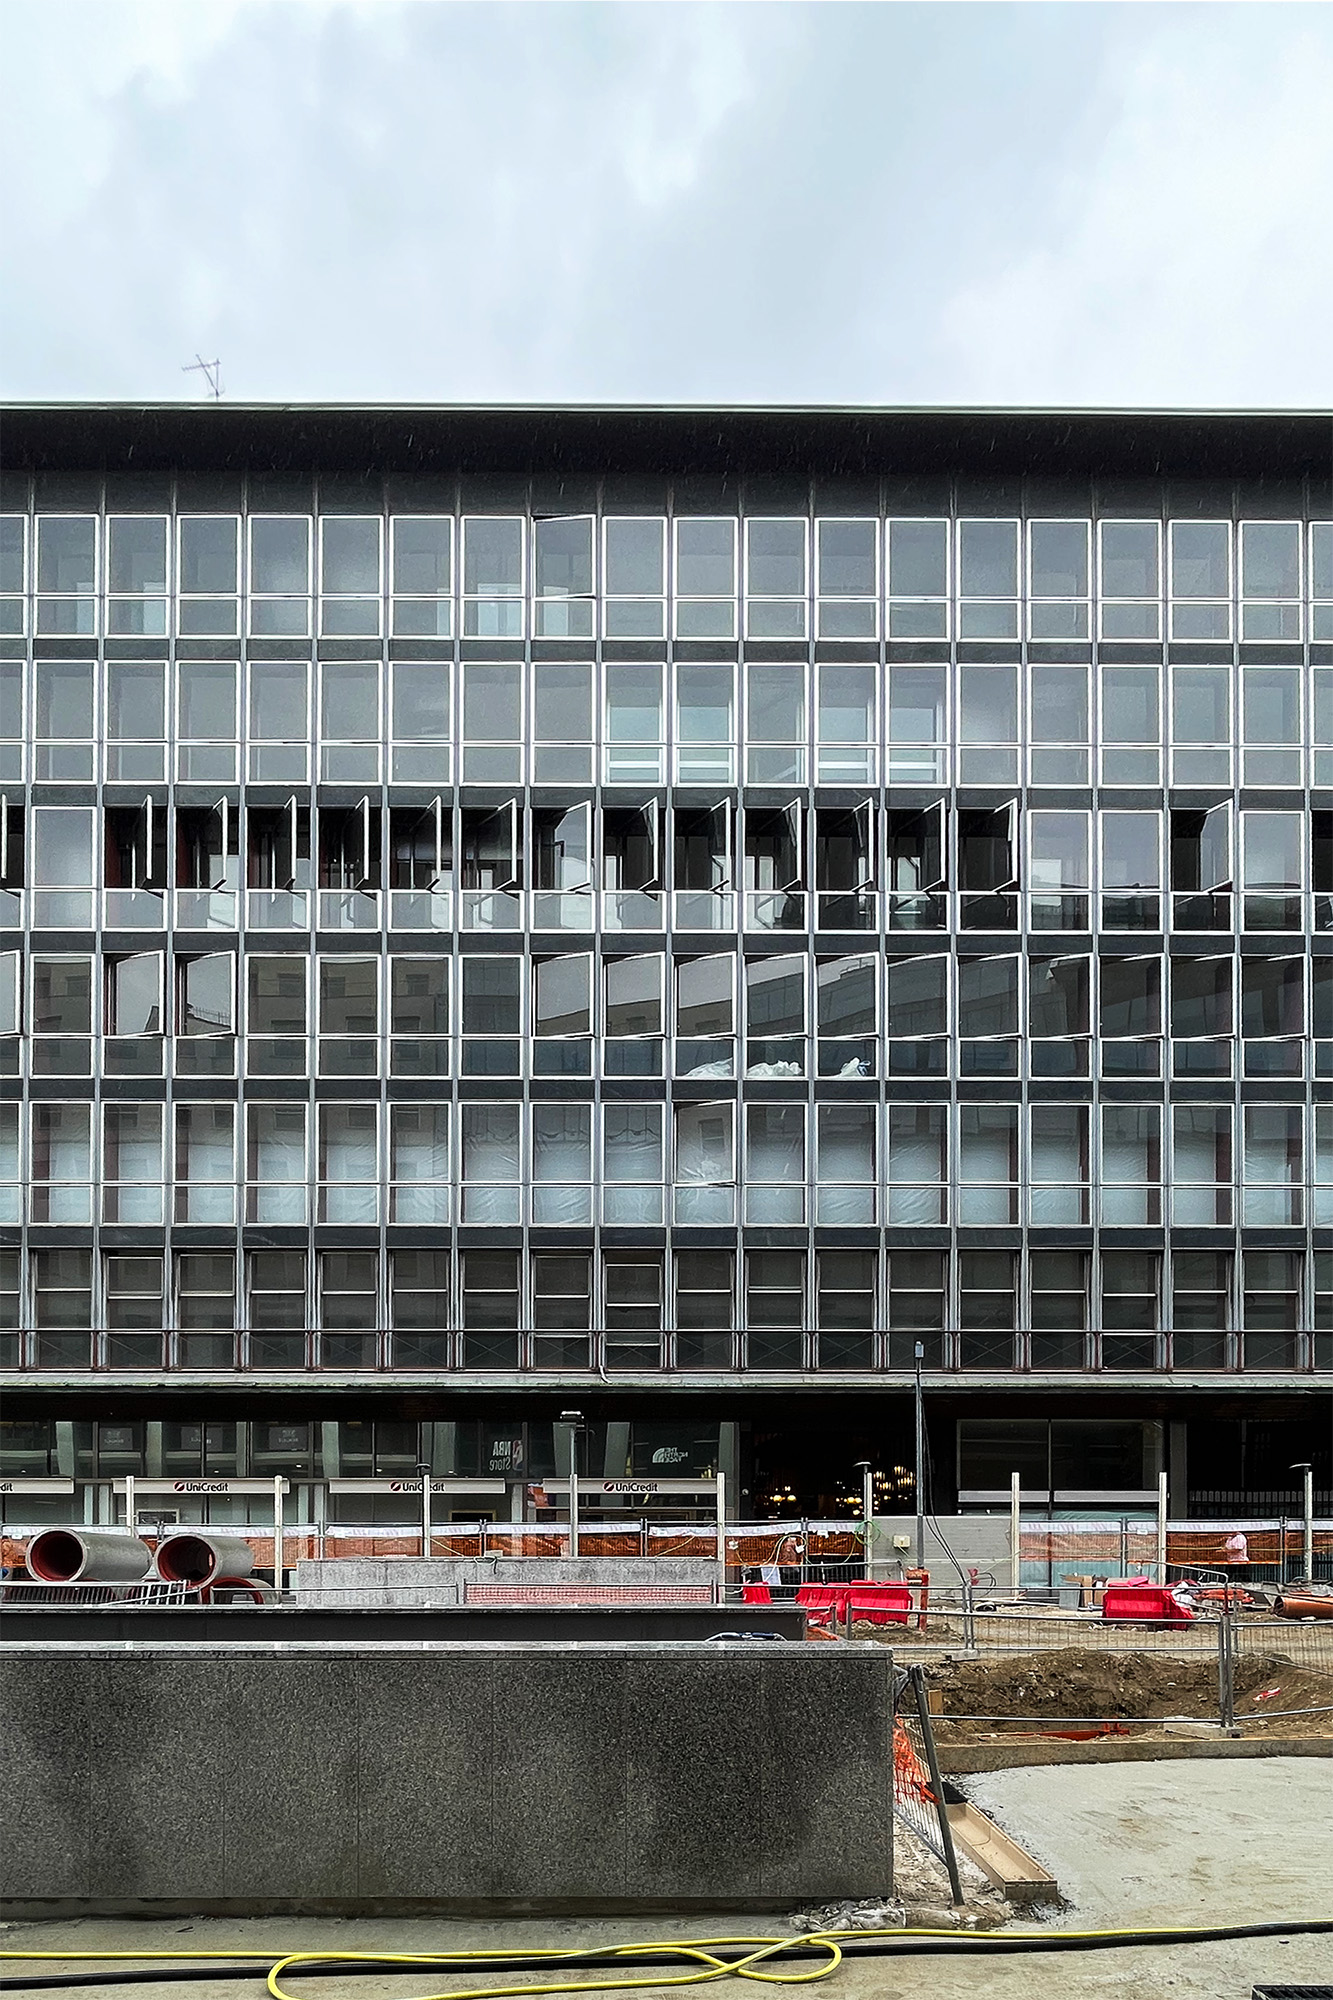 Die Edifici per uffici e negozi entstand 1959 nach einem Entwurf von Luigi Caccia Dominioni.